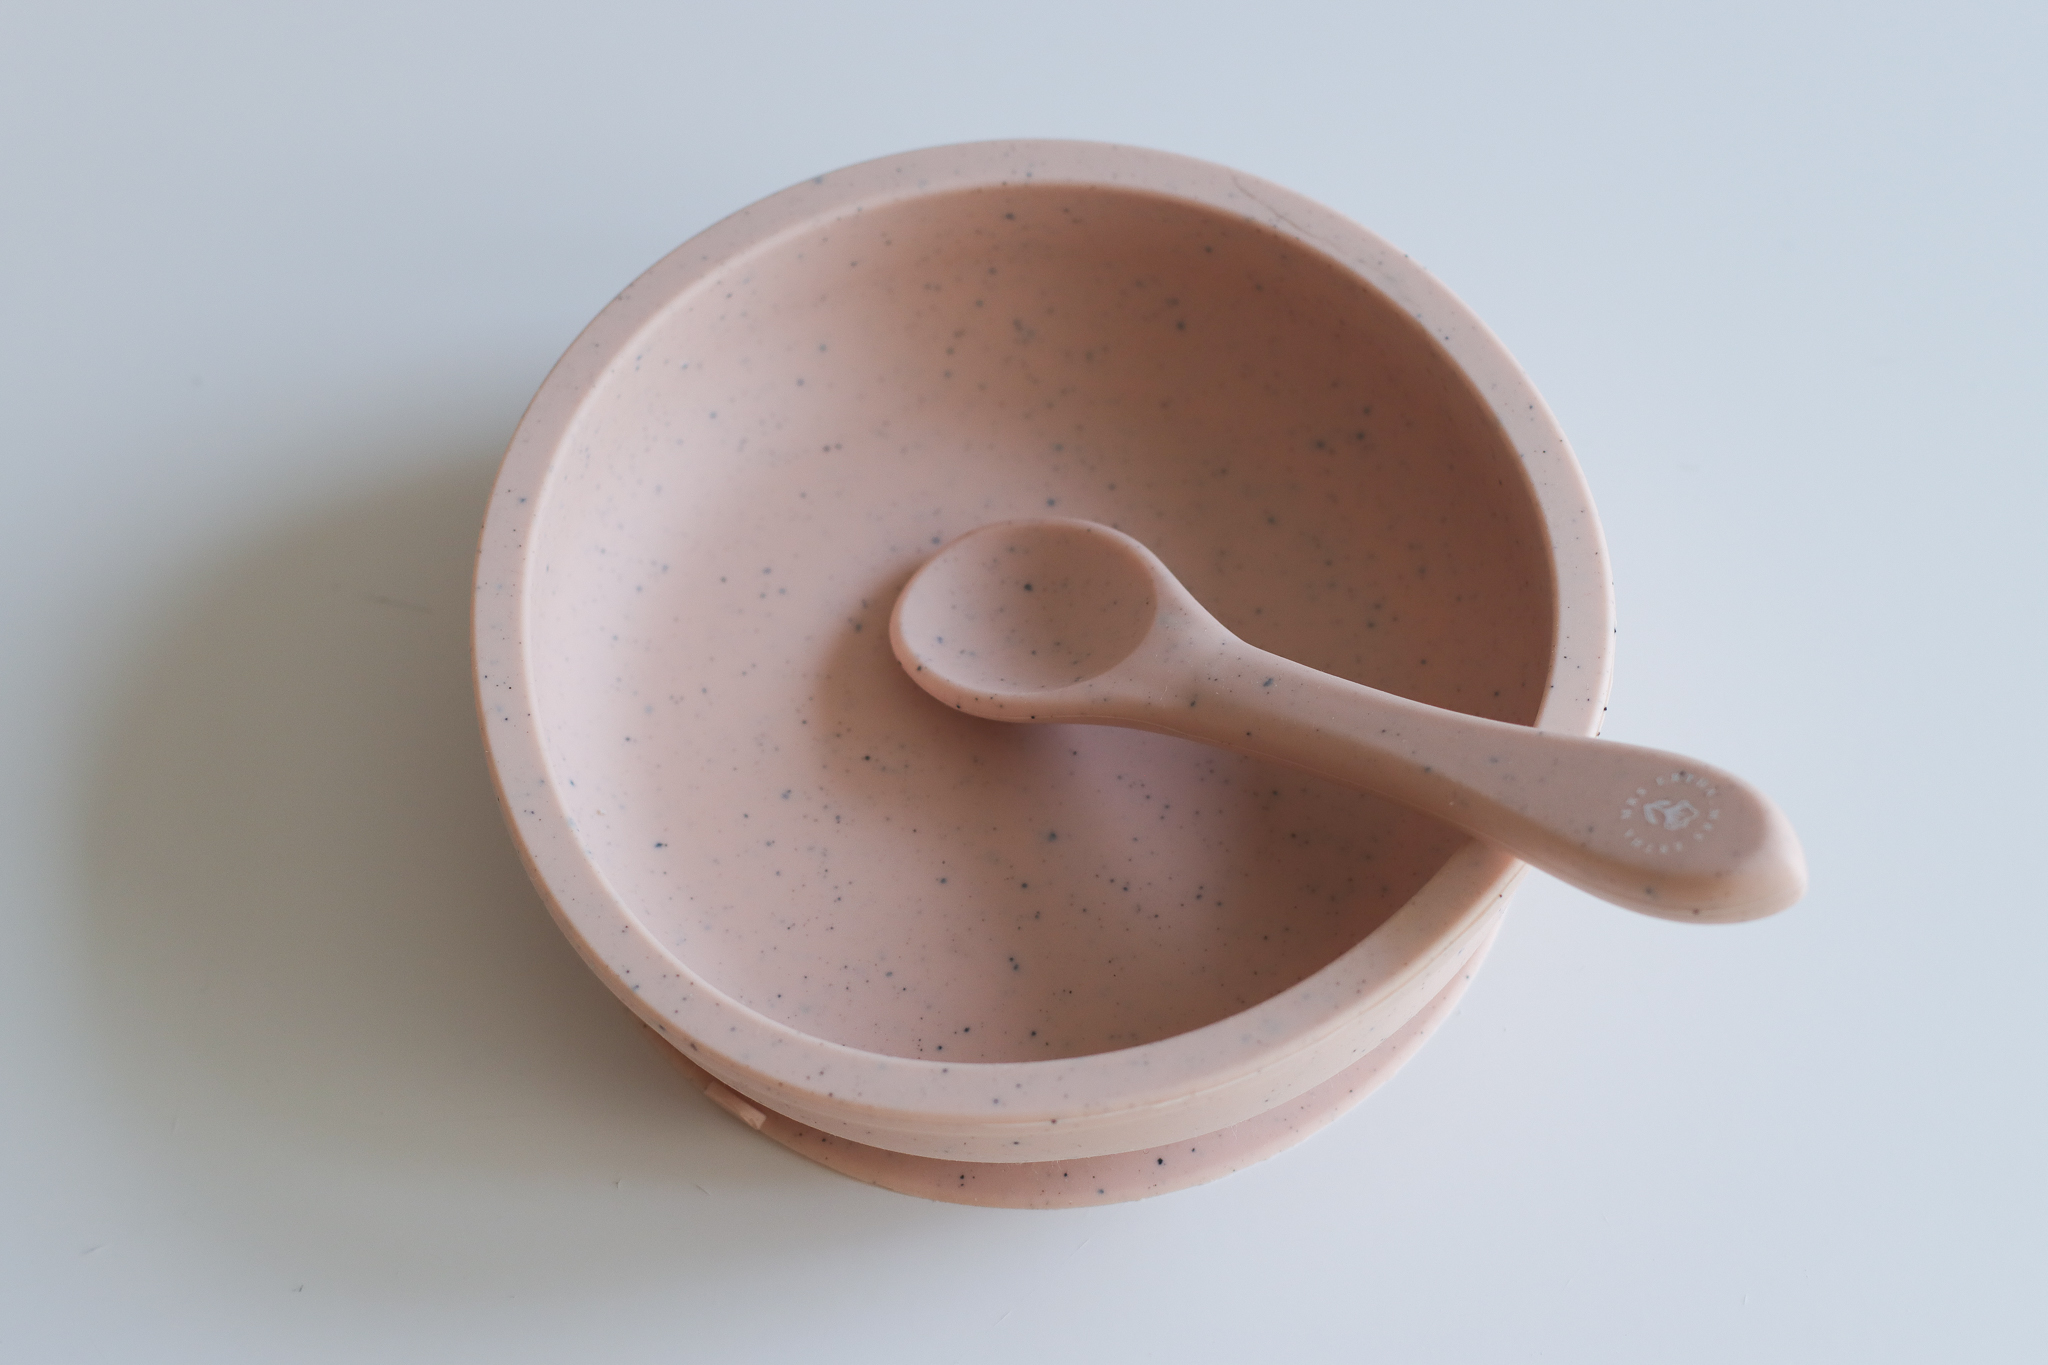 Silicone bowl + spoon – Blush speckle